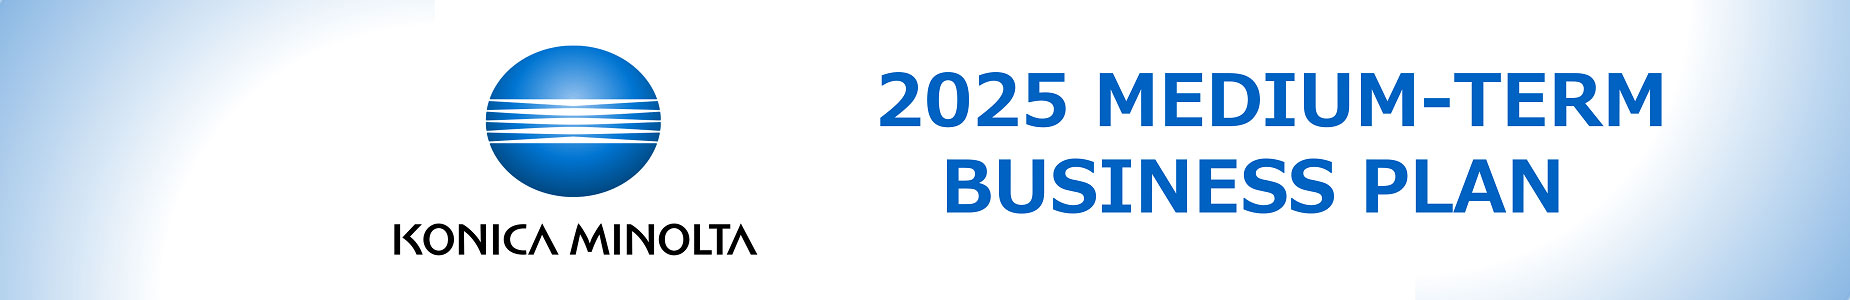 2025 Medium-term Business Plan